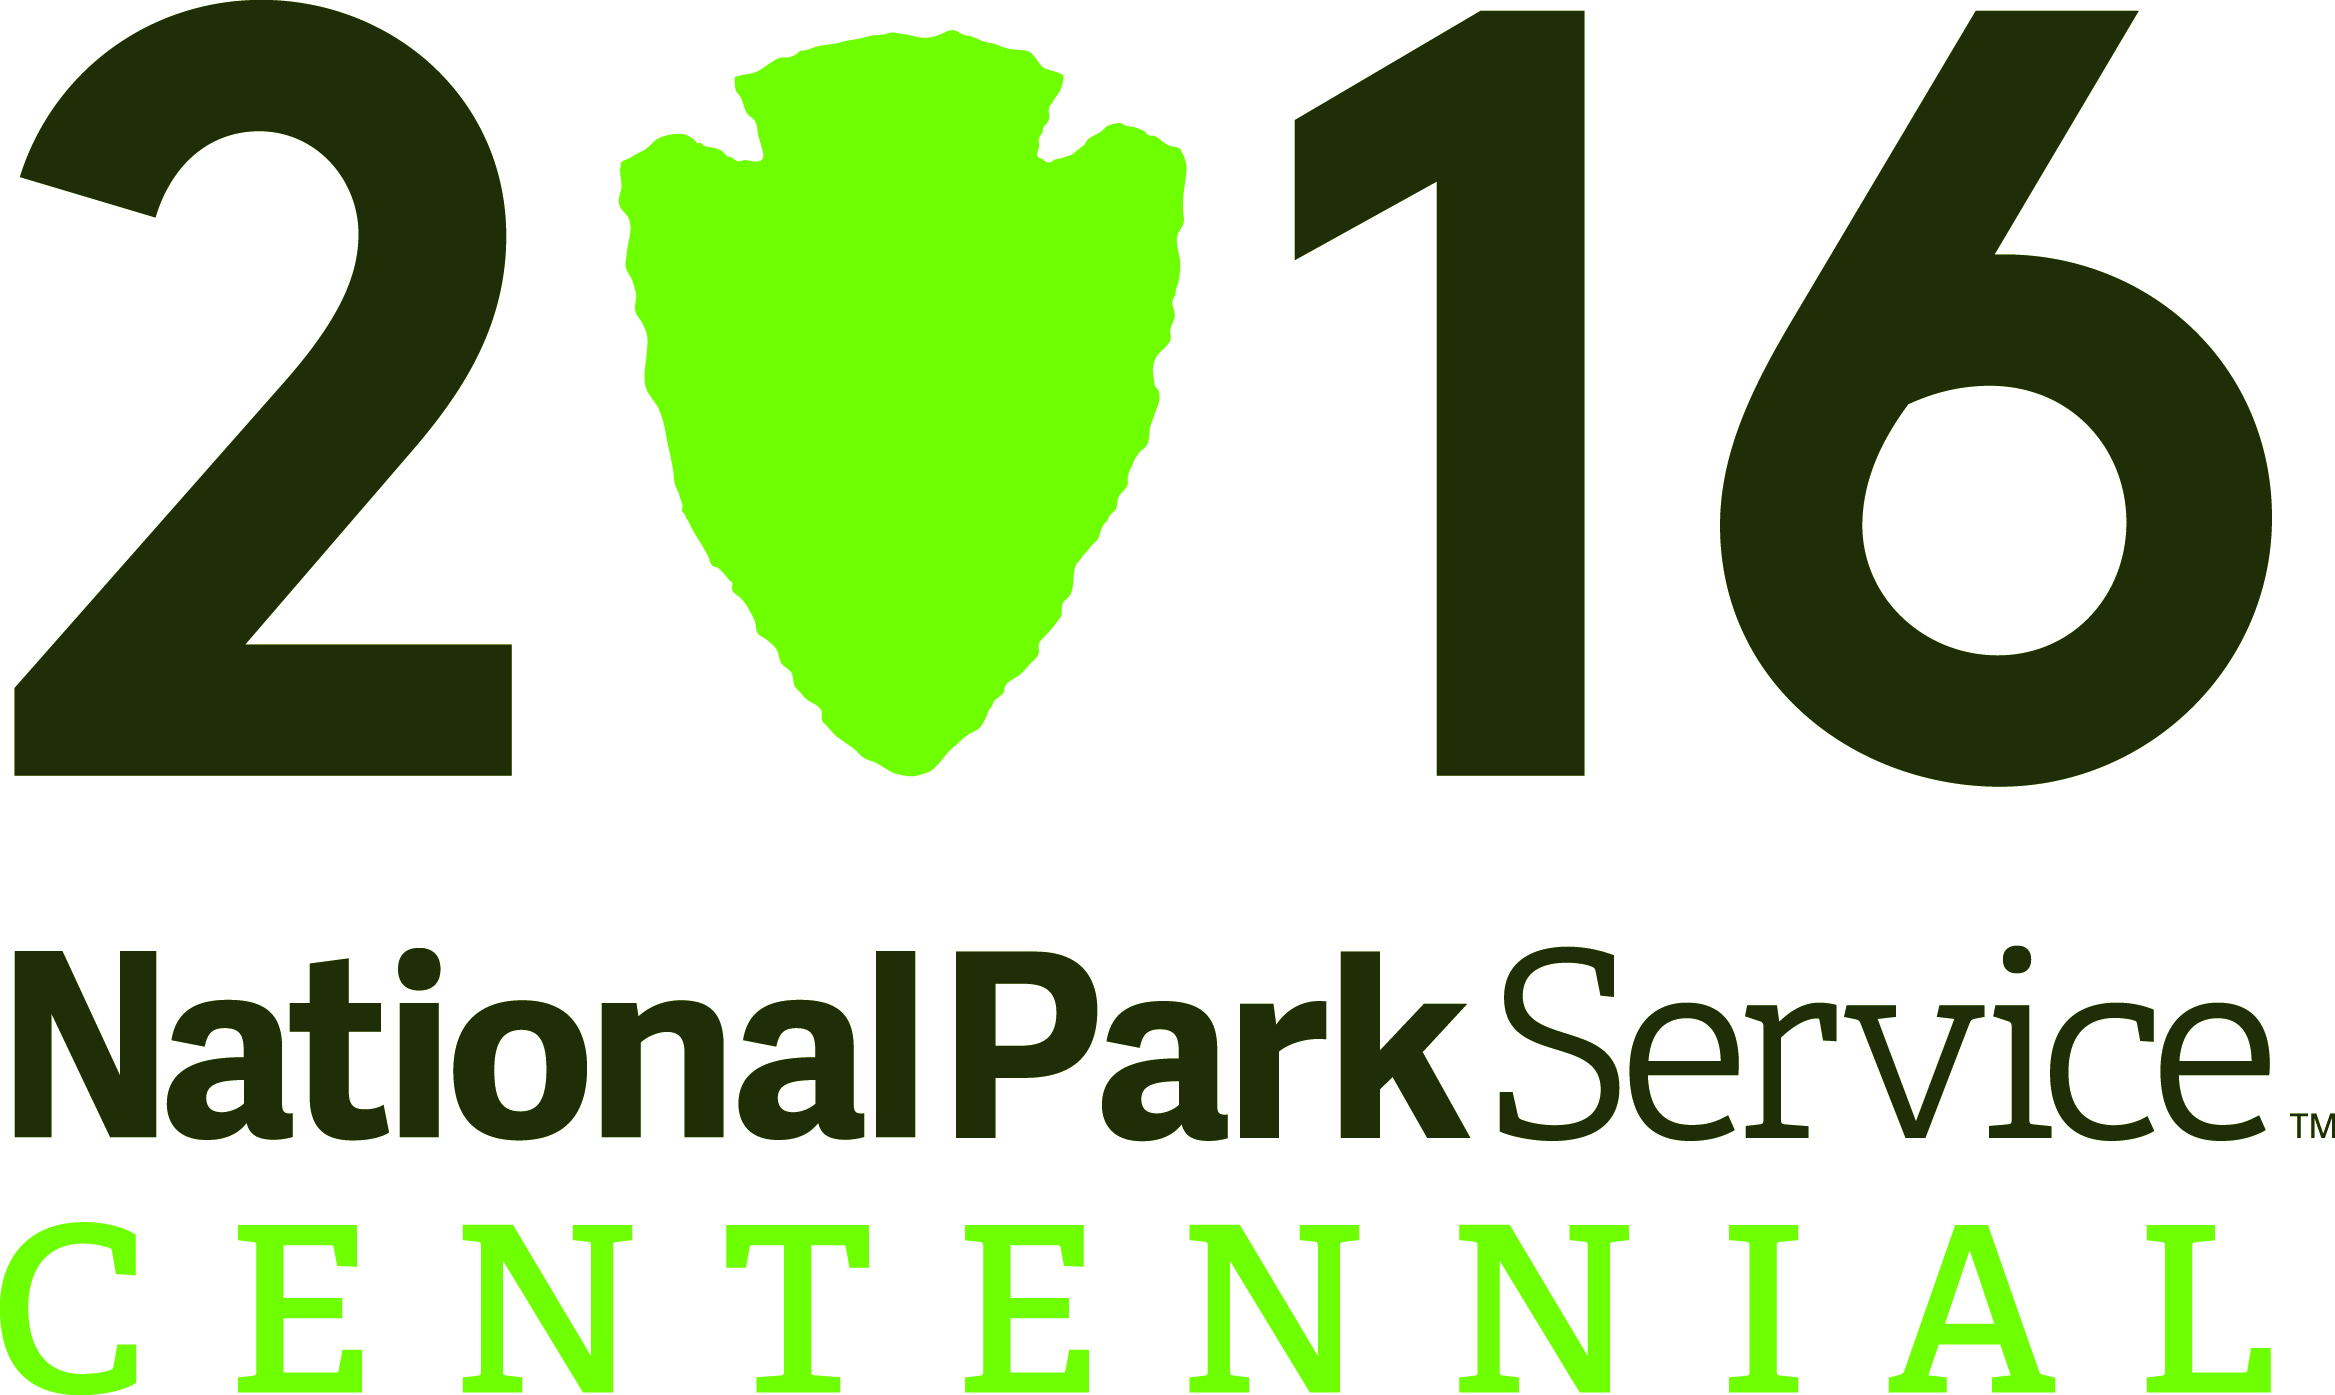 National Park Service centennial logo. Image courtesy of the National Park Service.